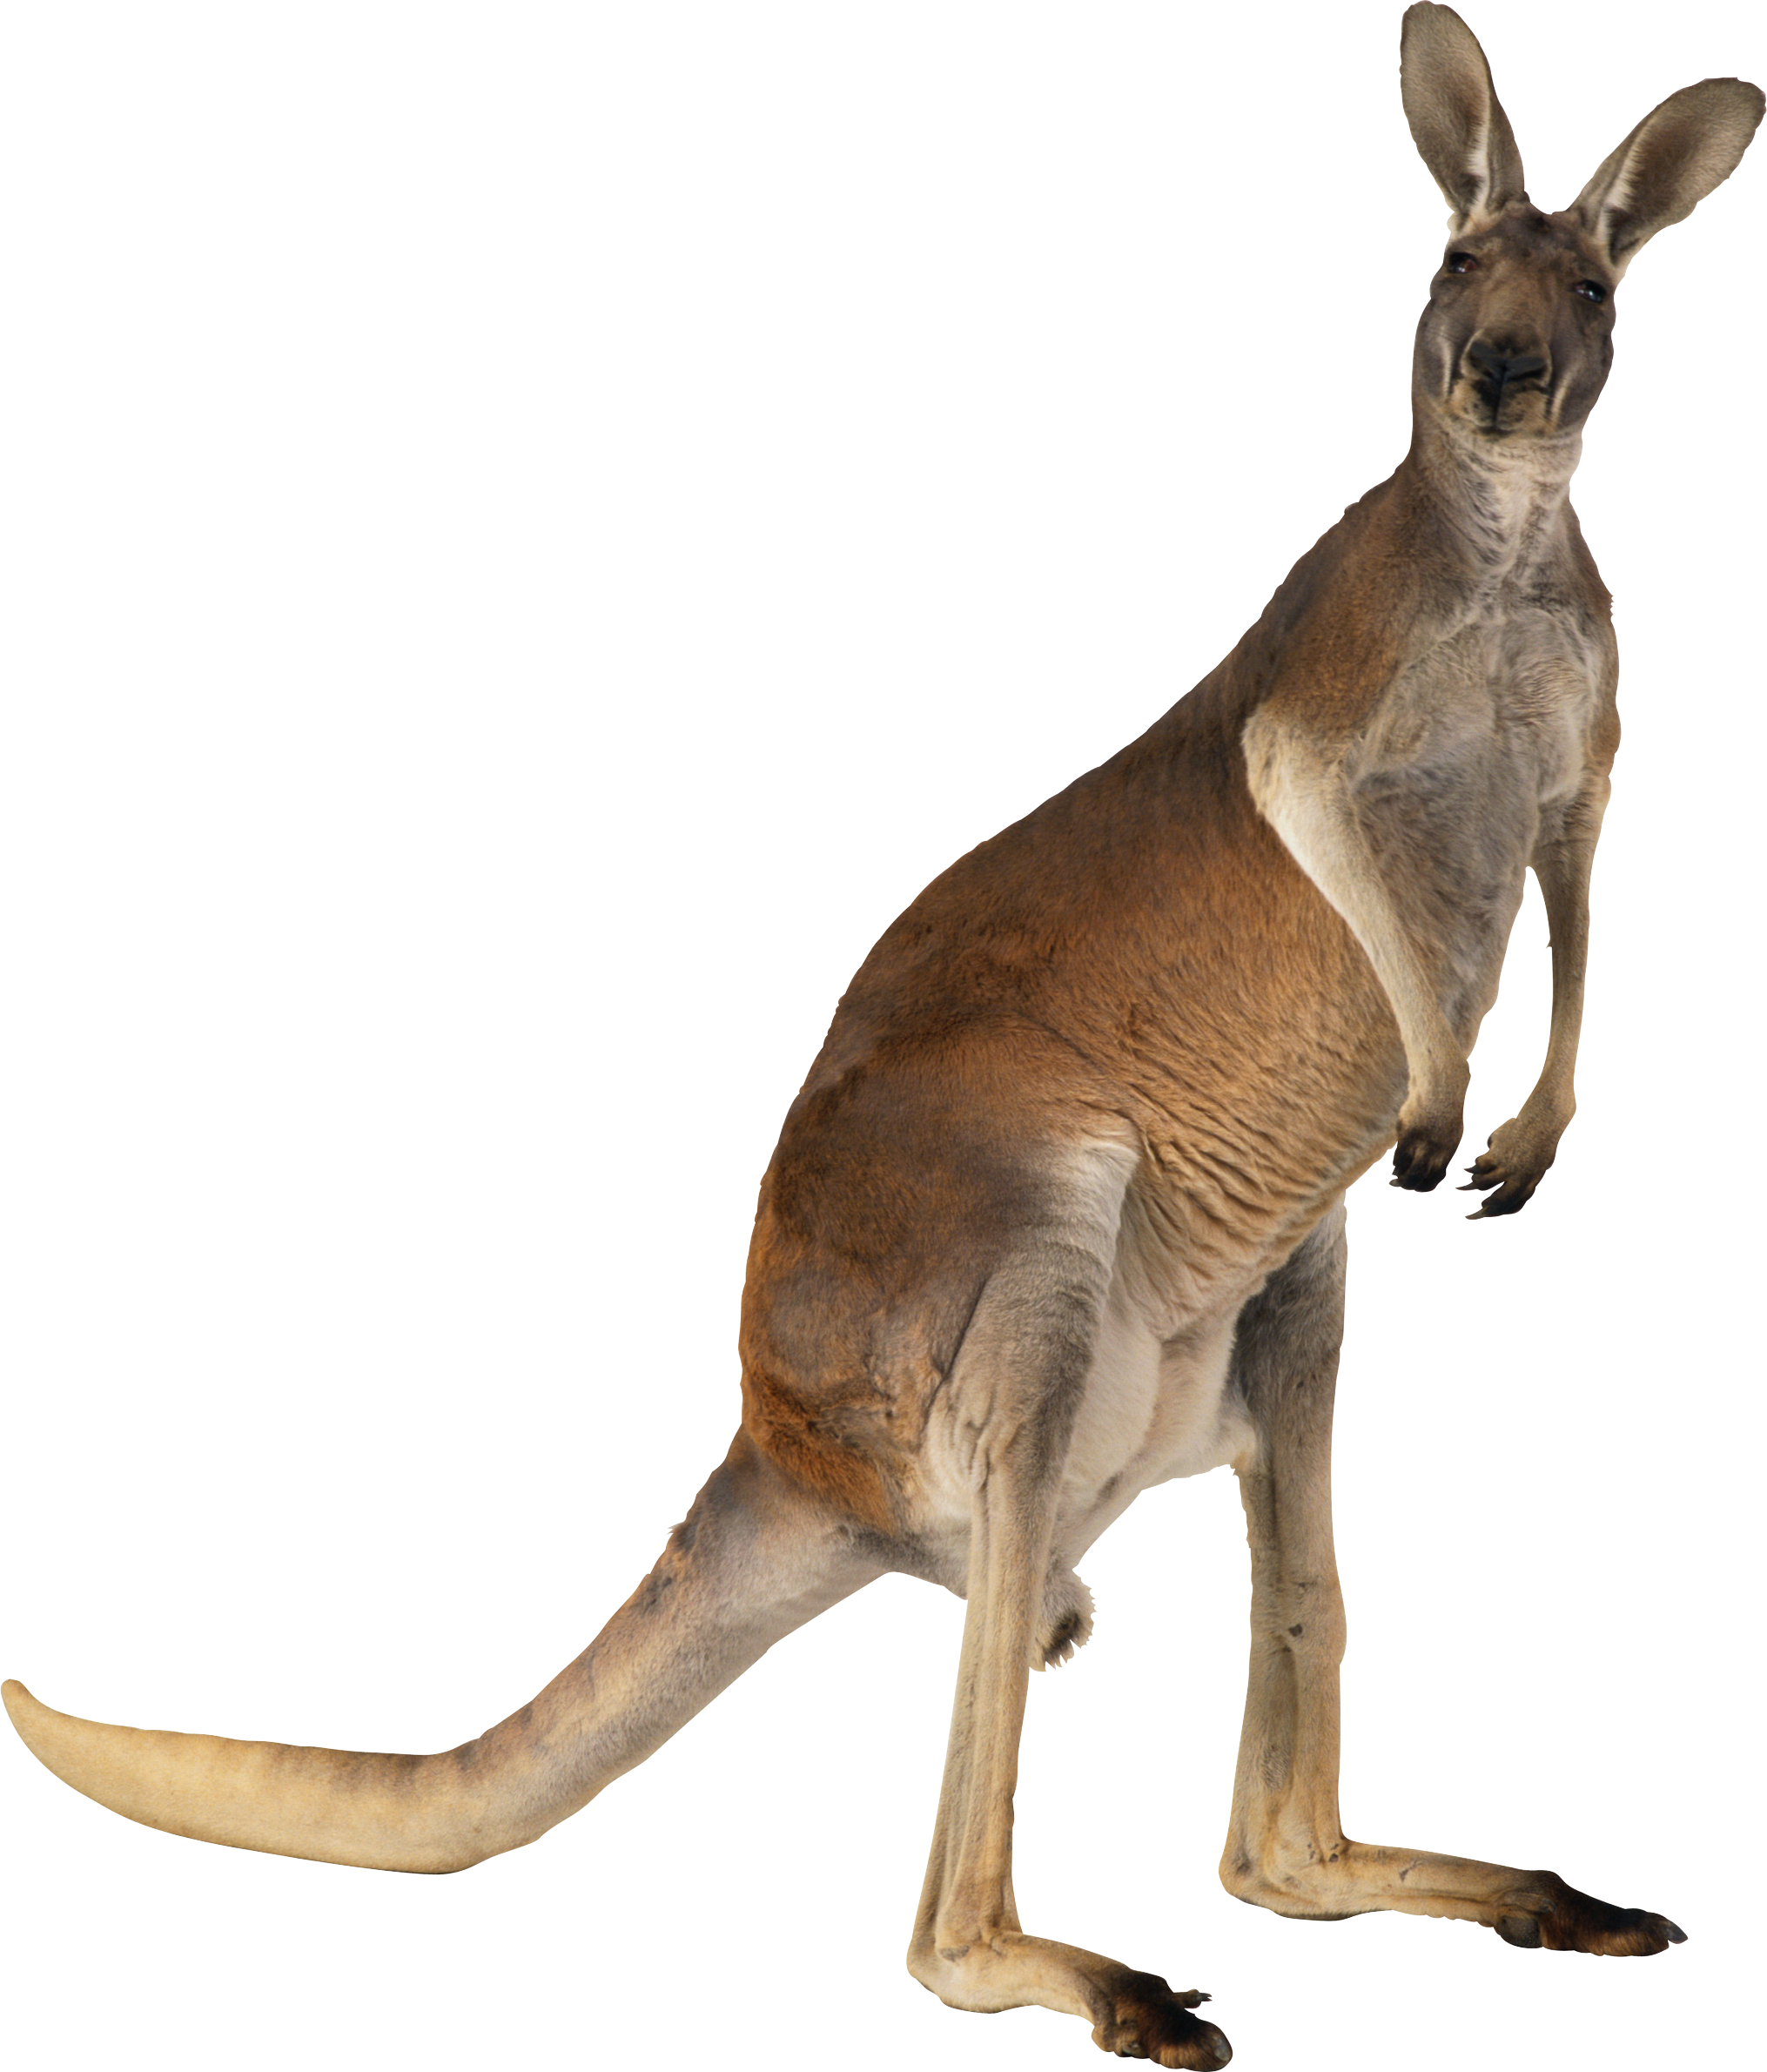 Kangaroo Png - Kangaroo, Transparent background PNG HD thumbnail